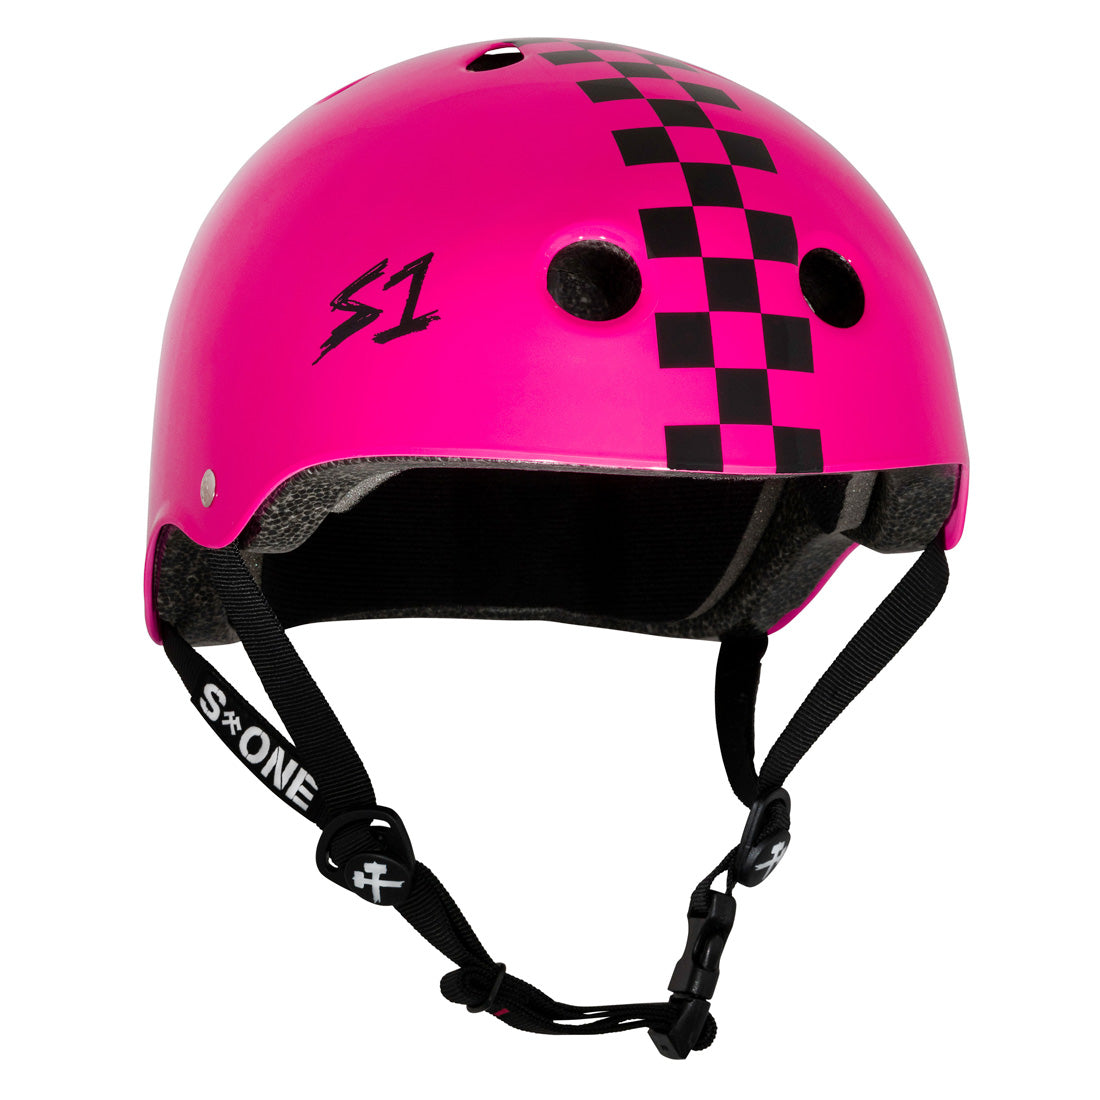 S-One Lifer Helmet - Pink Gloss/Checker Helmets